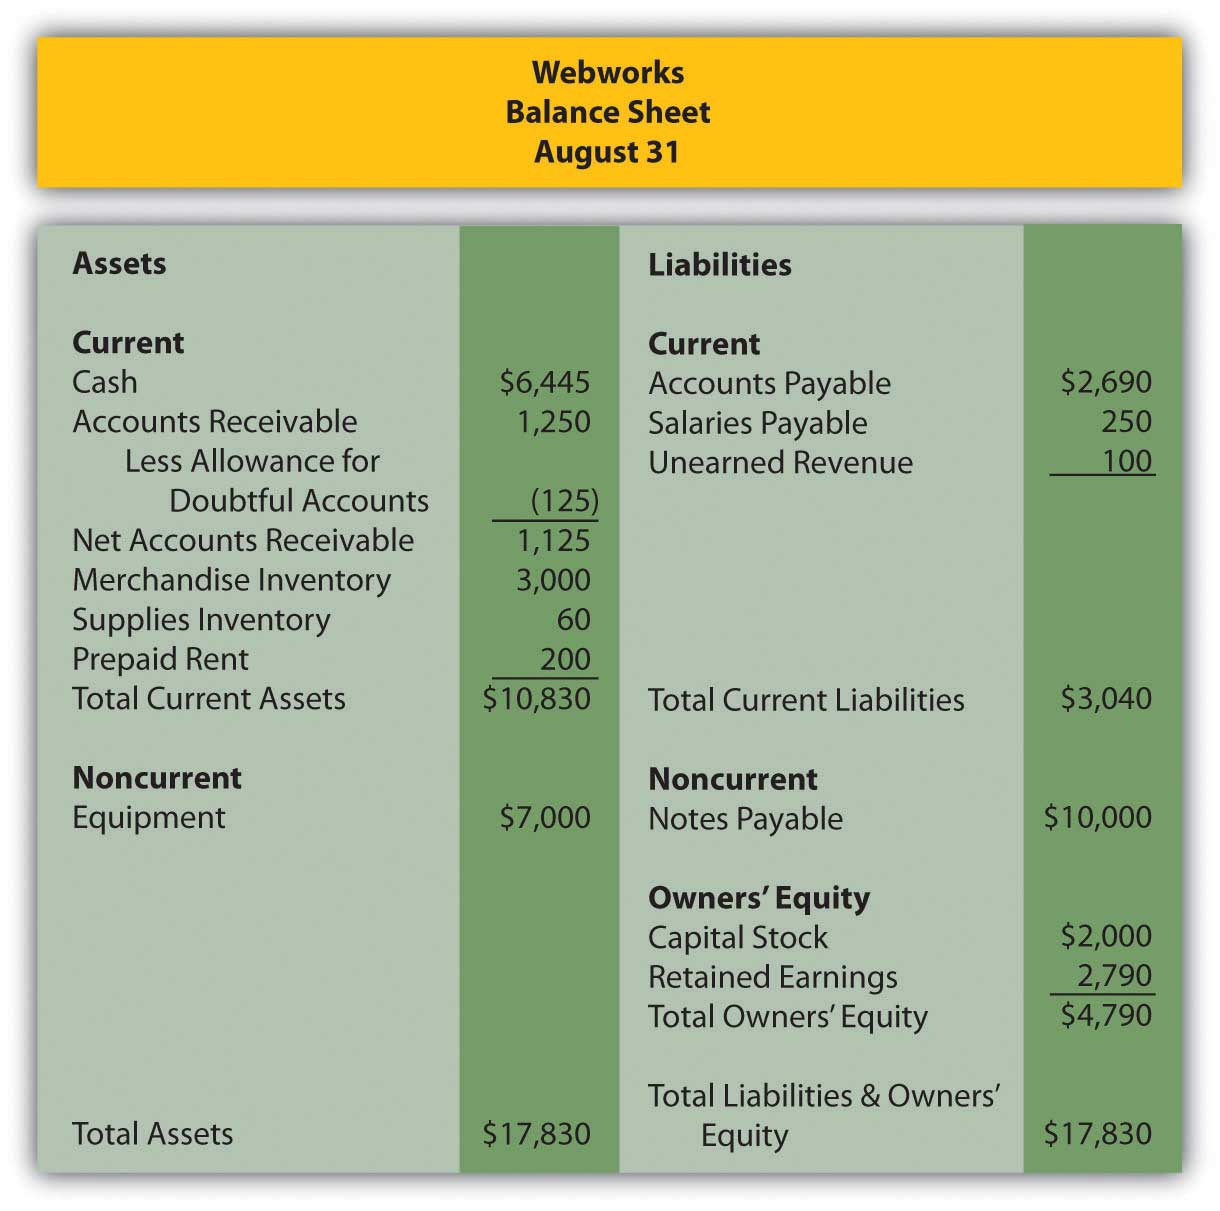 Webworks' Balance Sheet